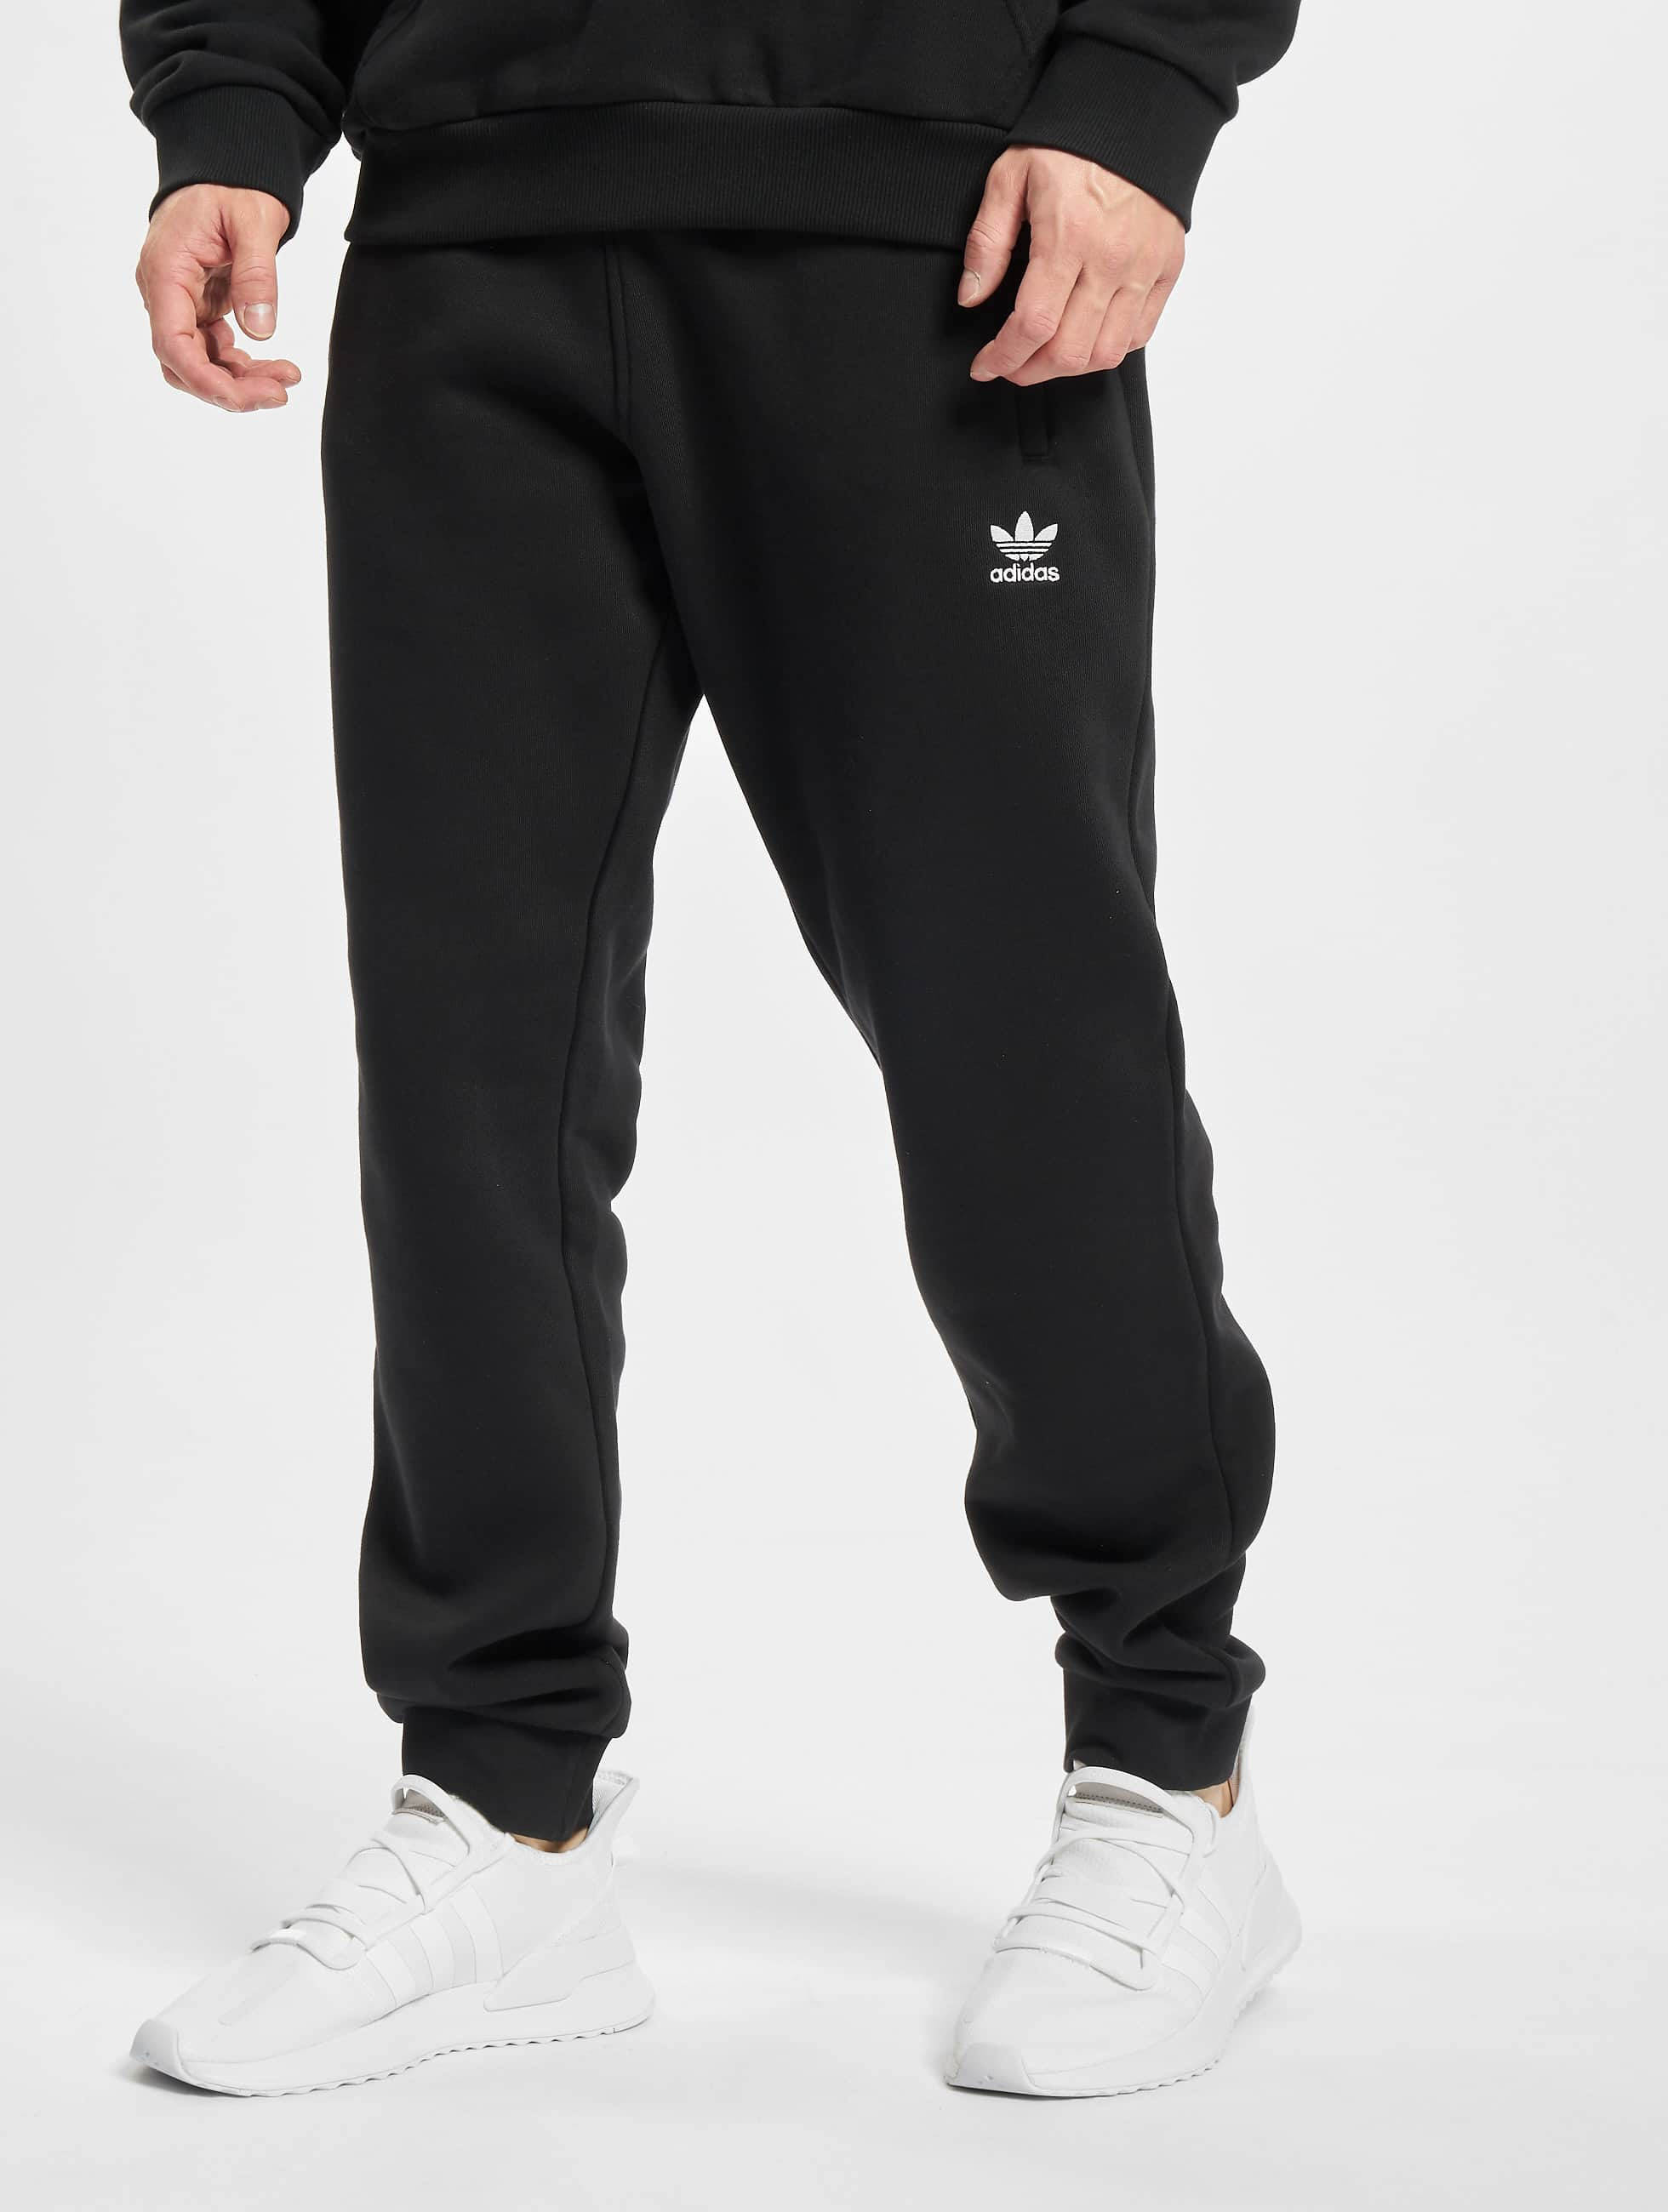 galop pleegouders uitgehongerd adidas Originals Pant / Sweat Pant Originals in black 835178